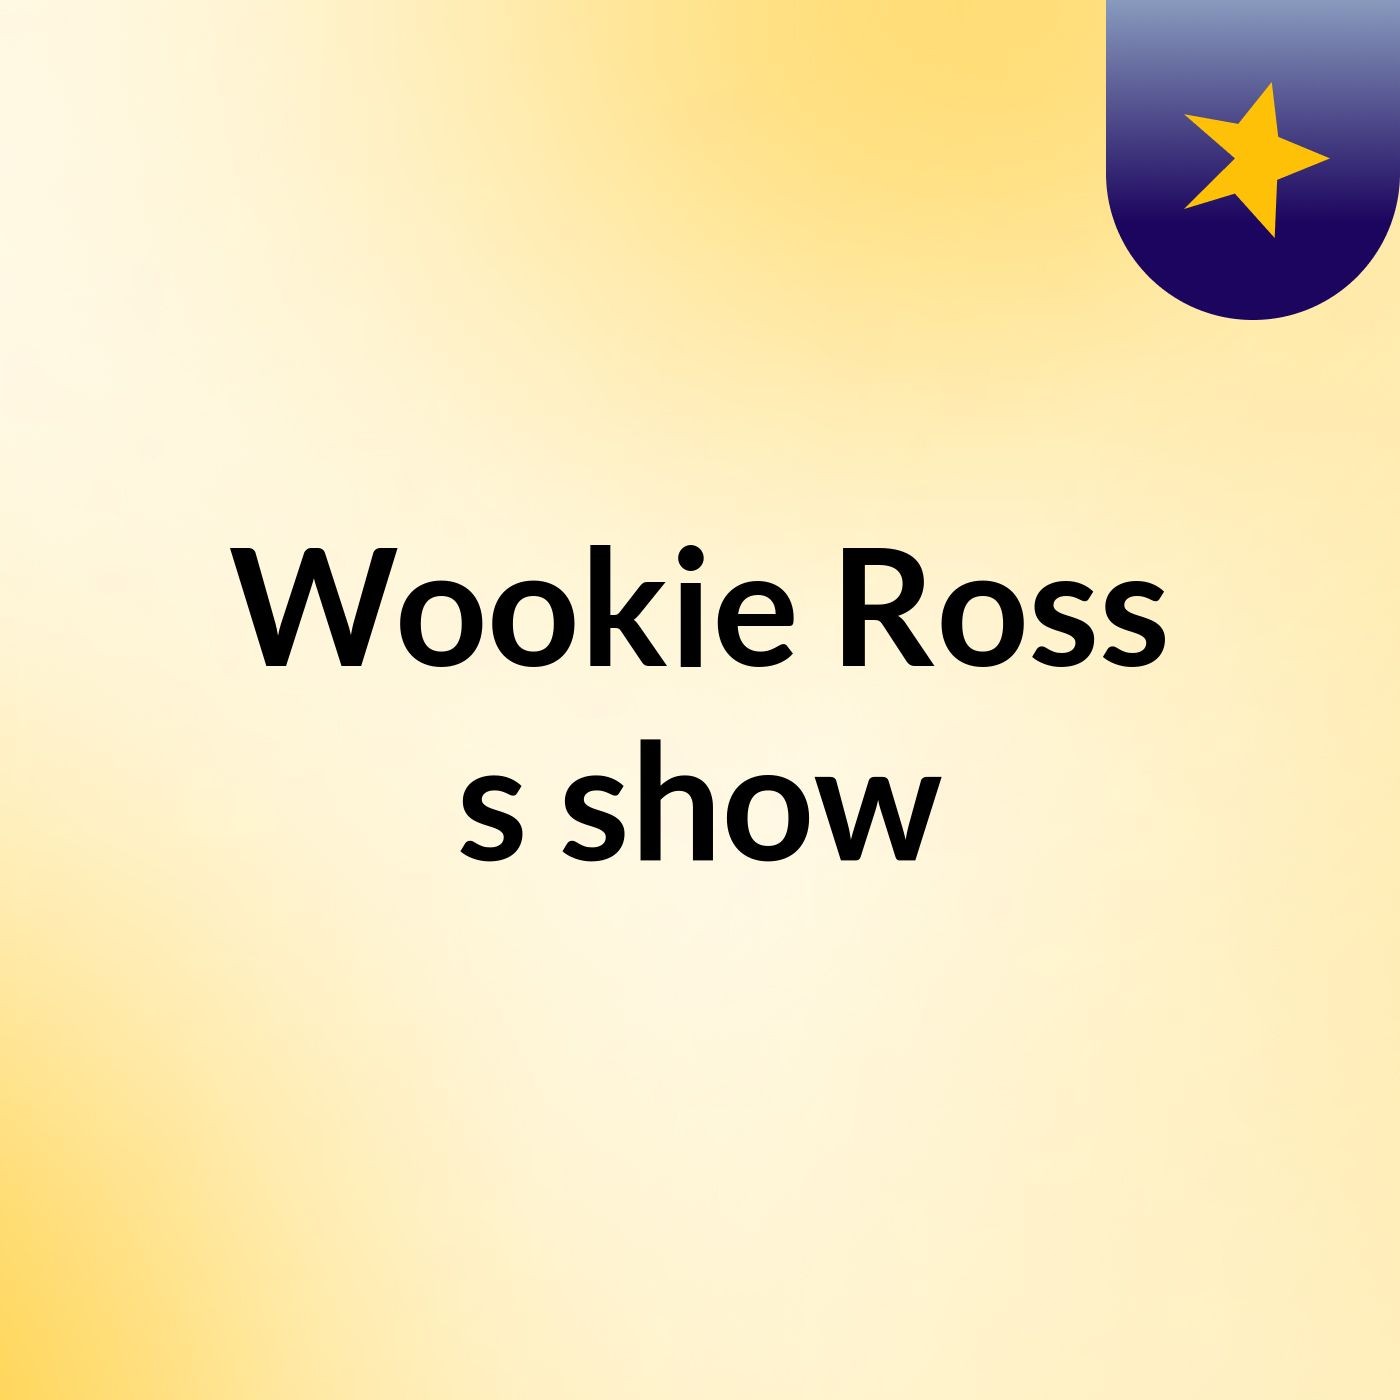 Episode 2 - Wookie Ross's show